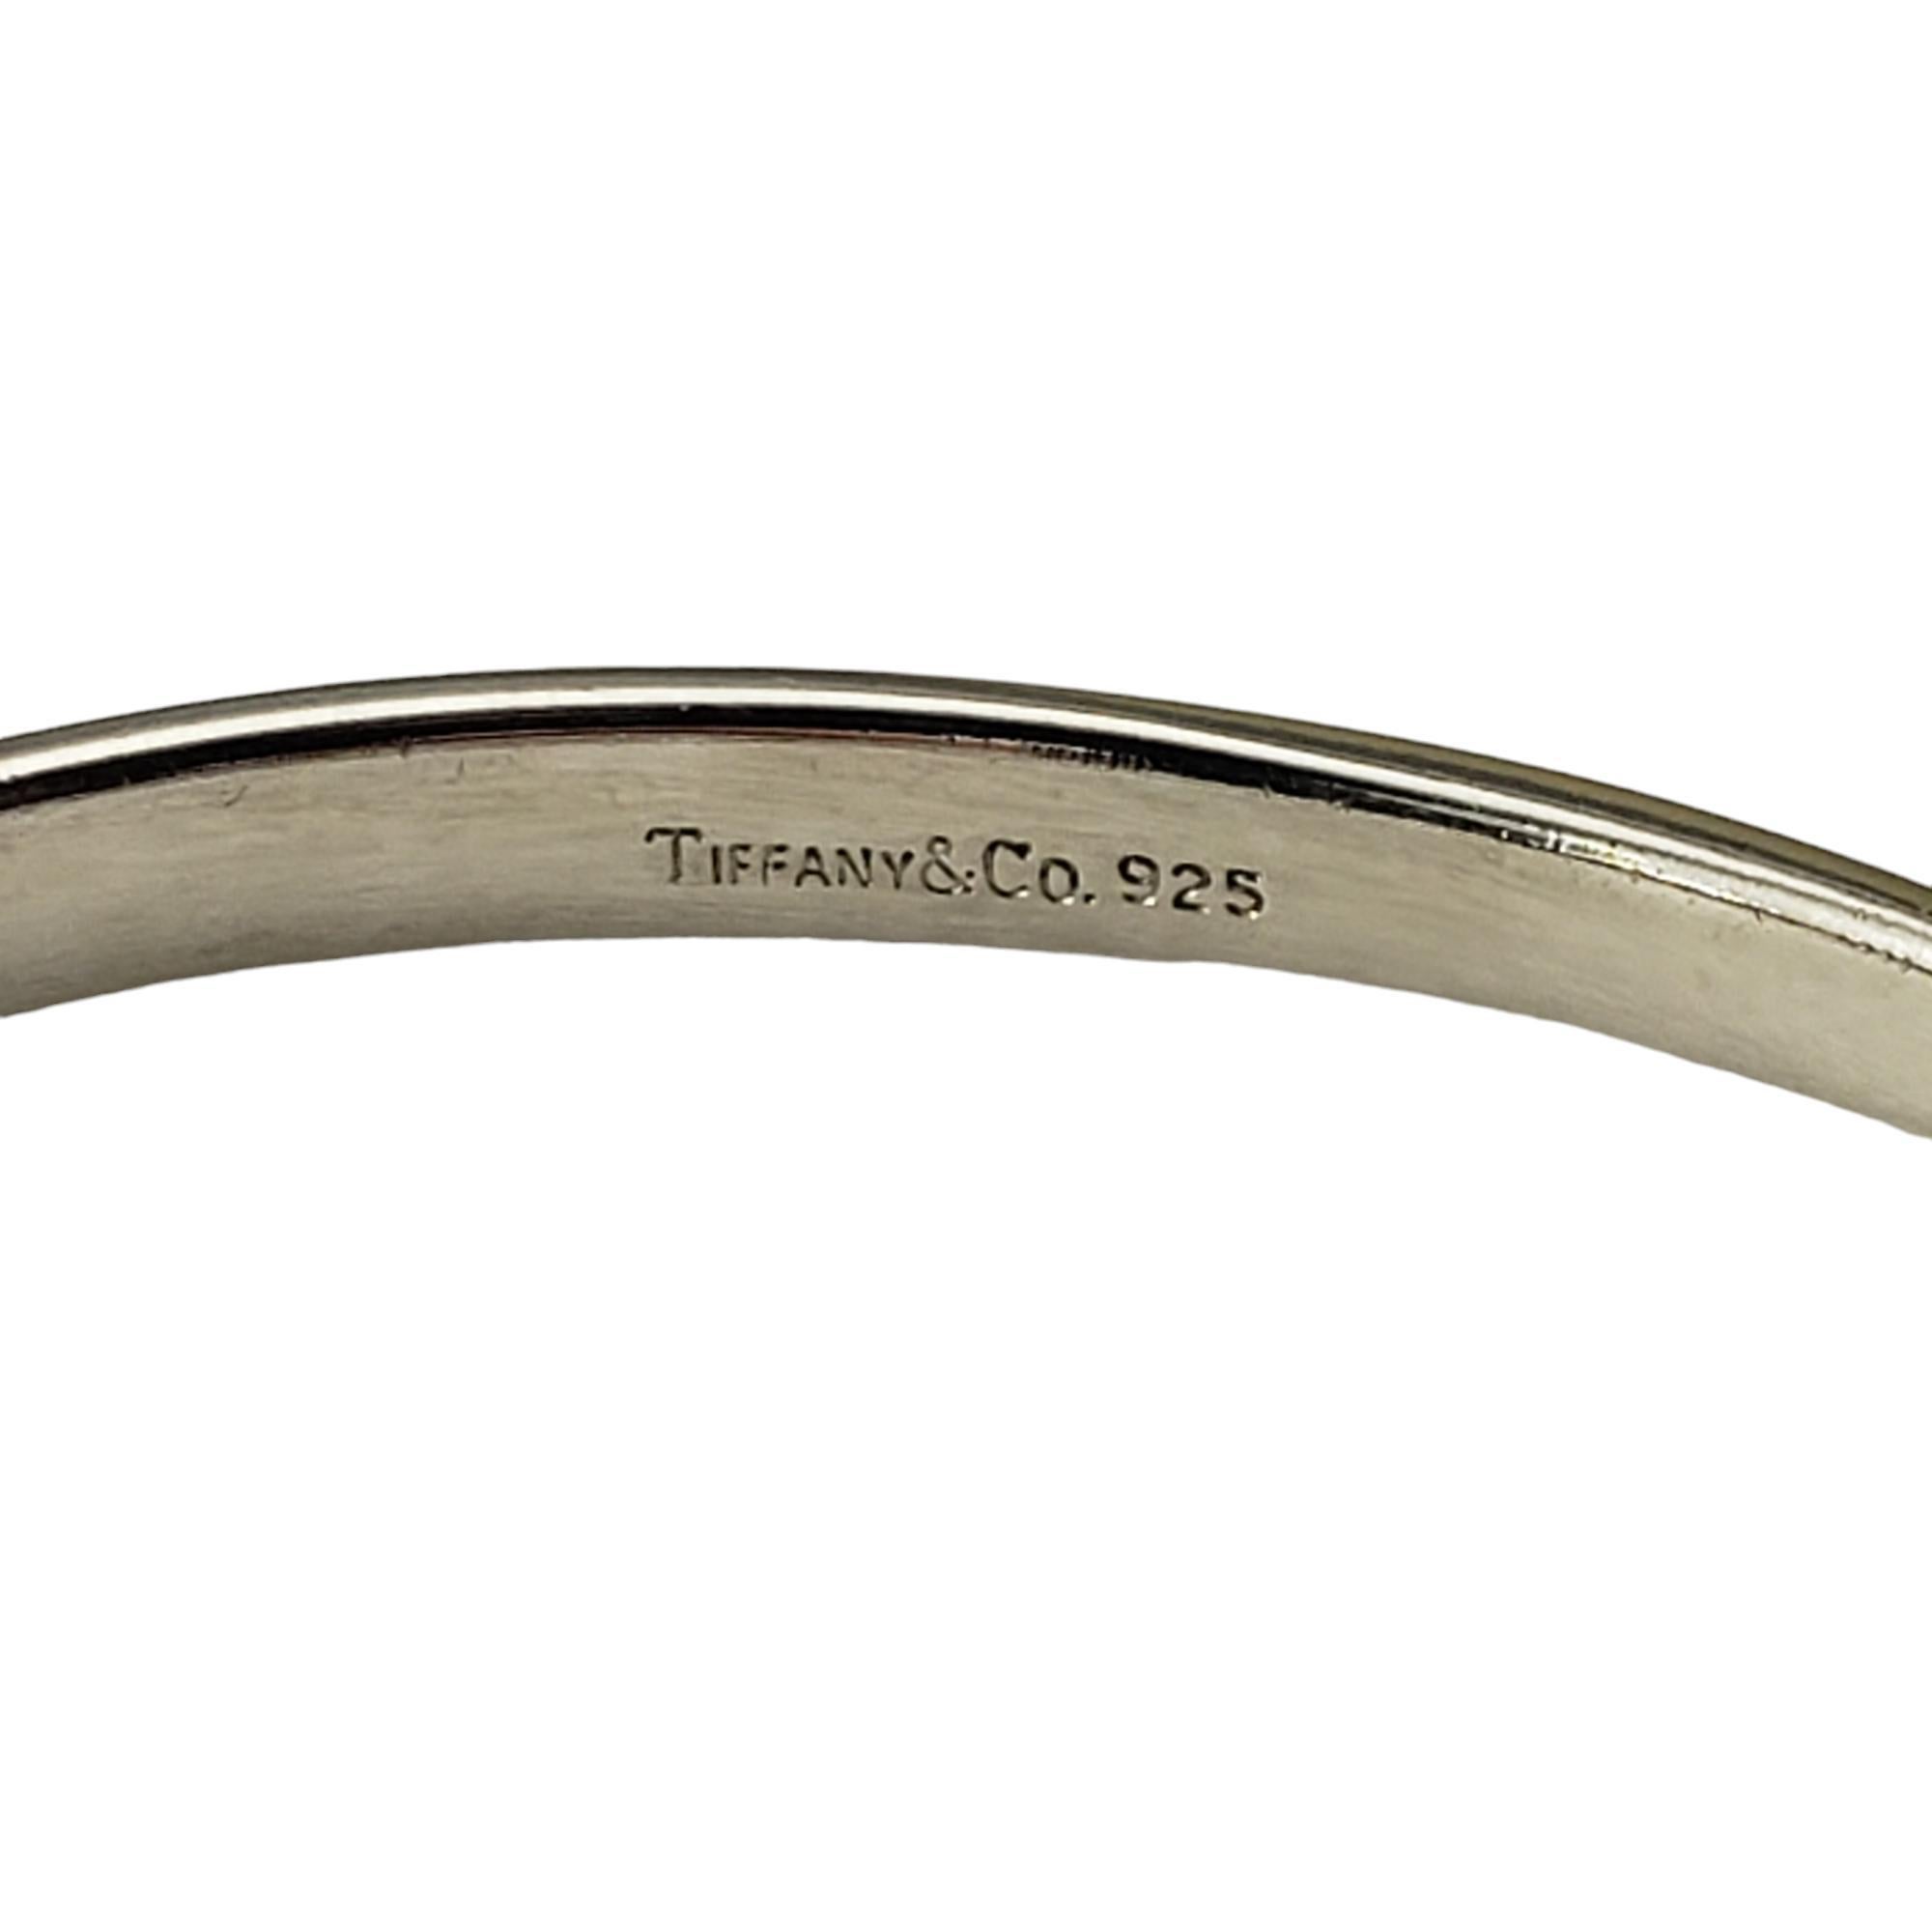 Tiffany & Co. Sterling Silver Loop Interlocking Bangle Bracelet #17297 1